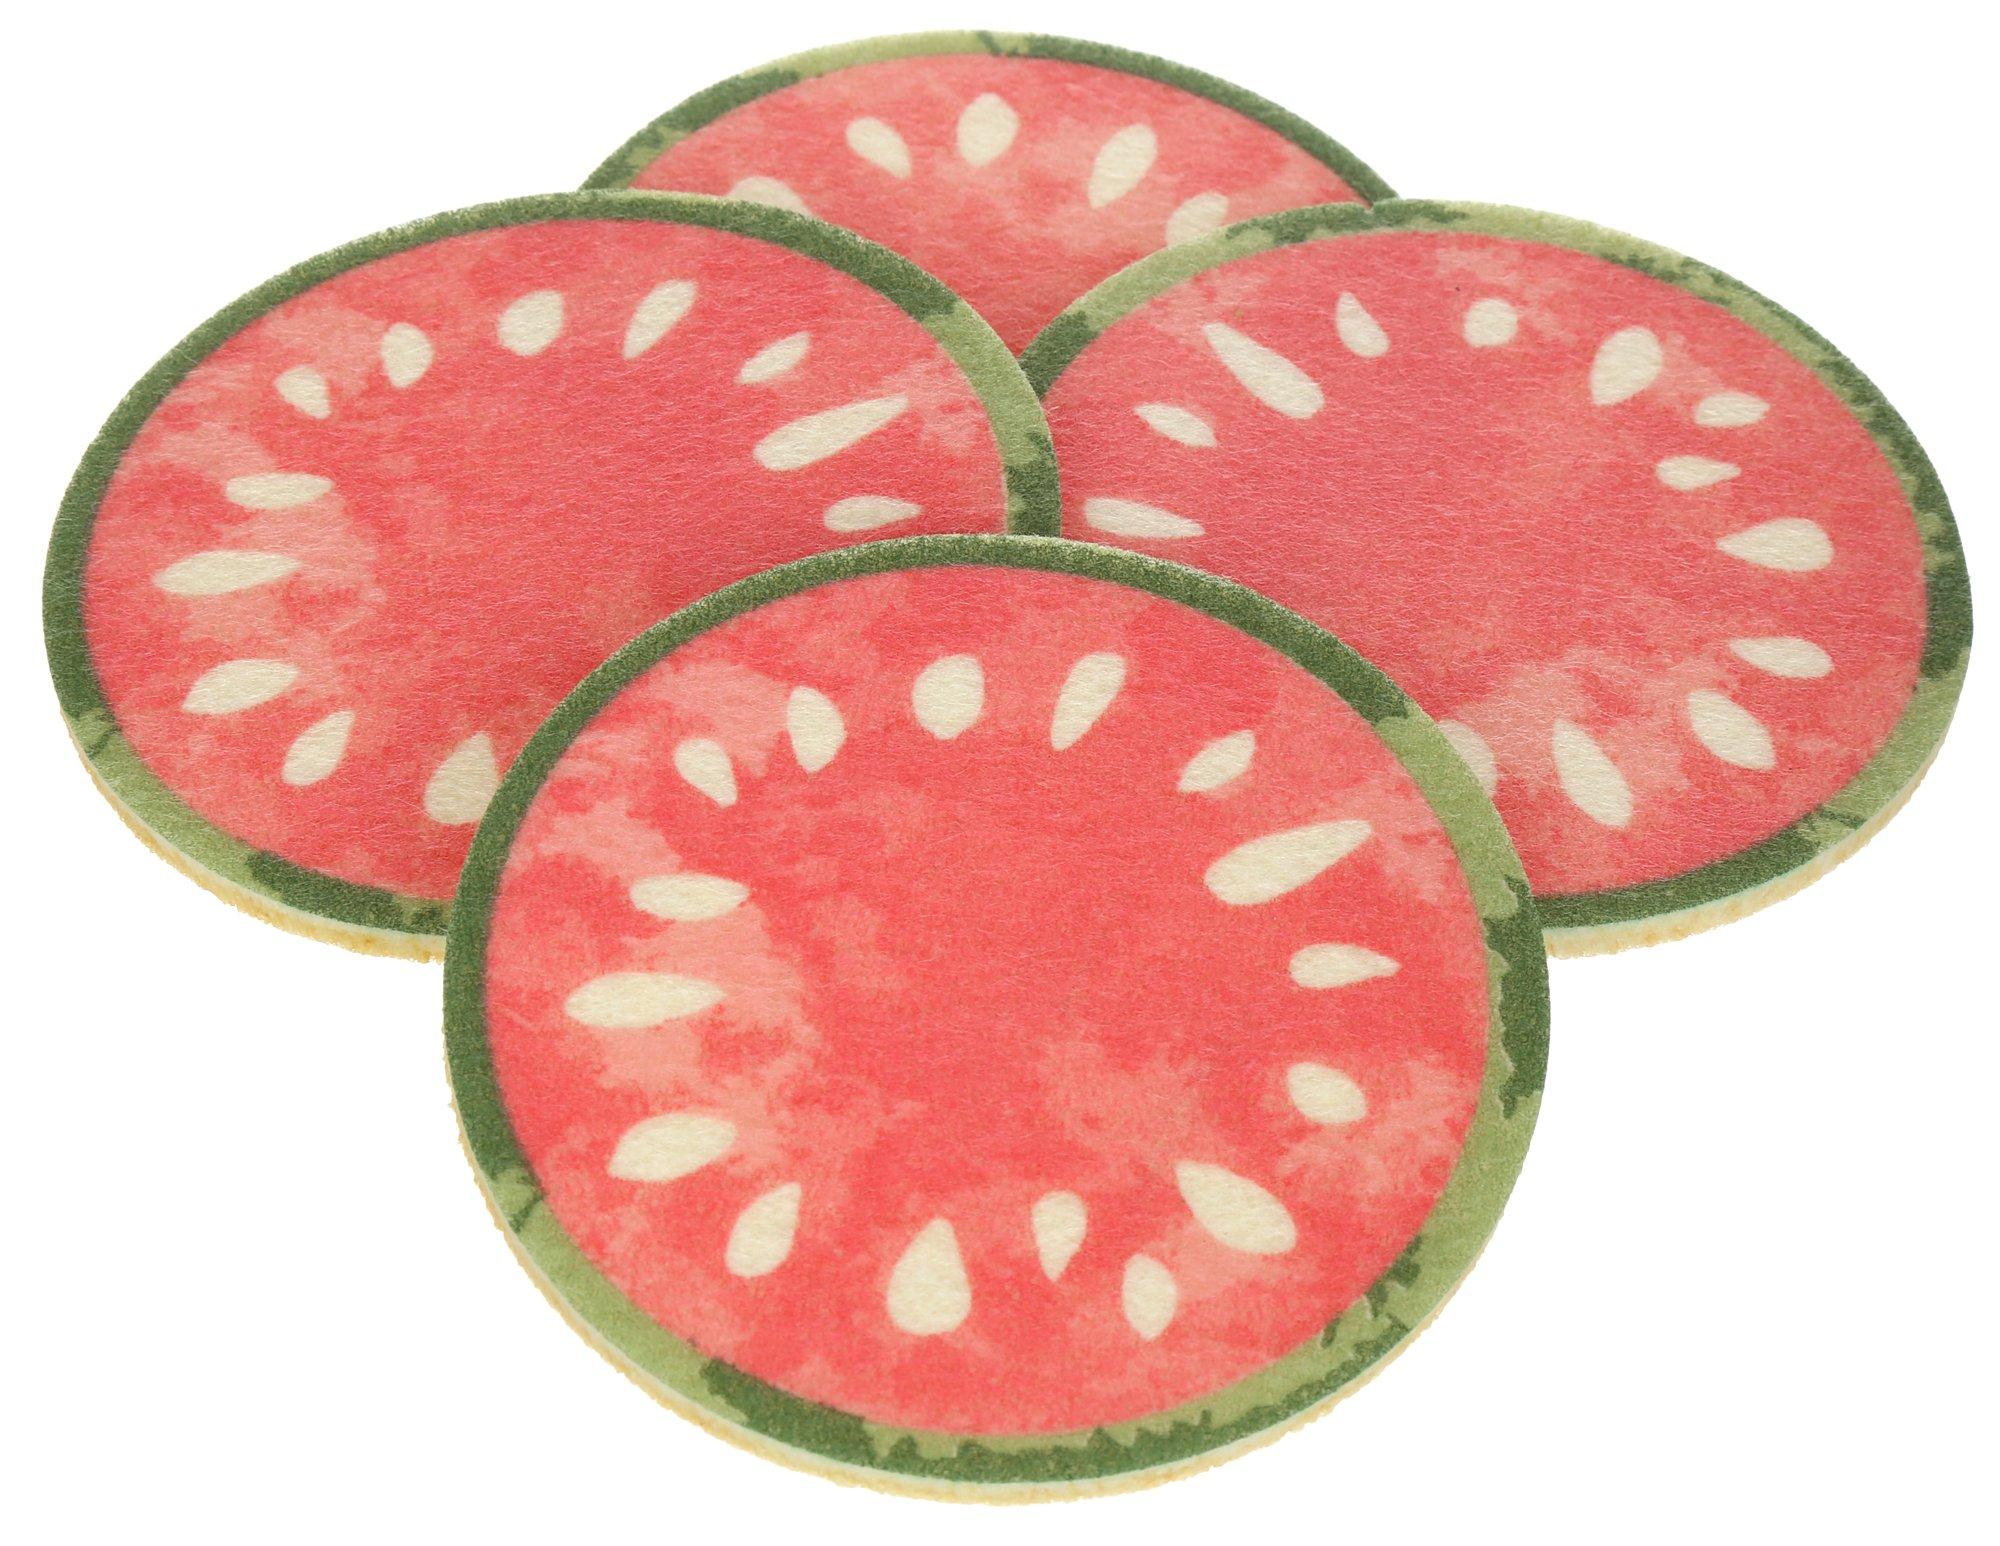 4 Pk Watermelon Coasters